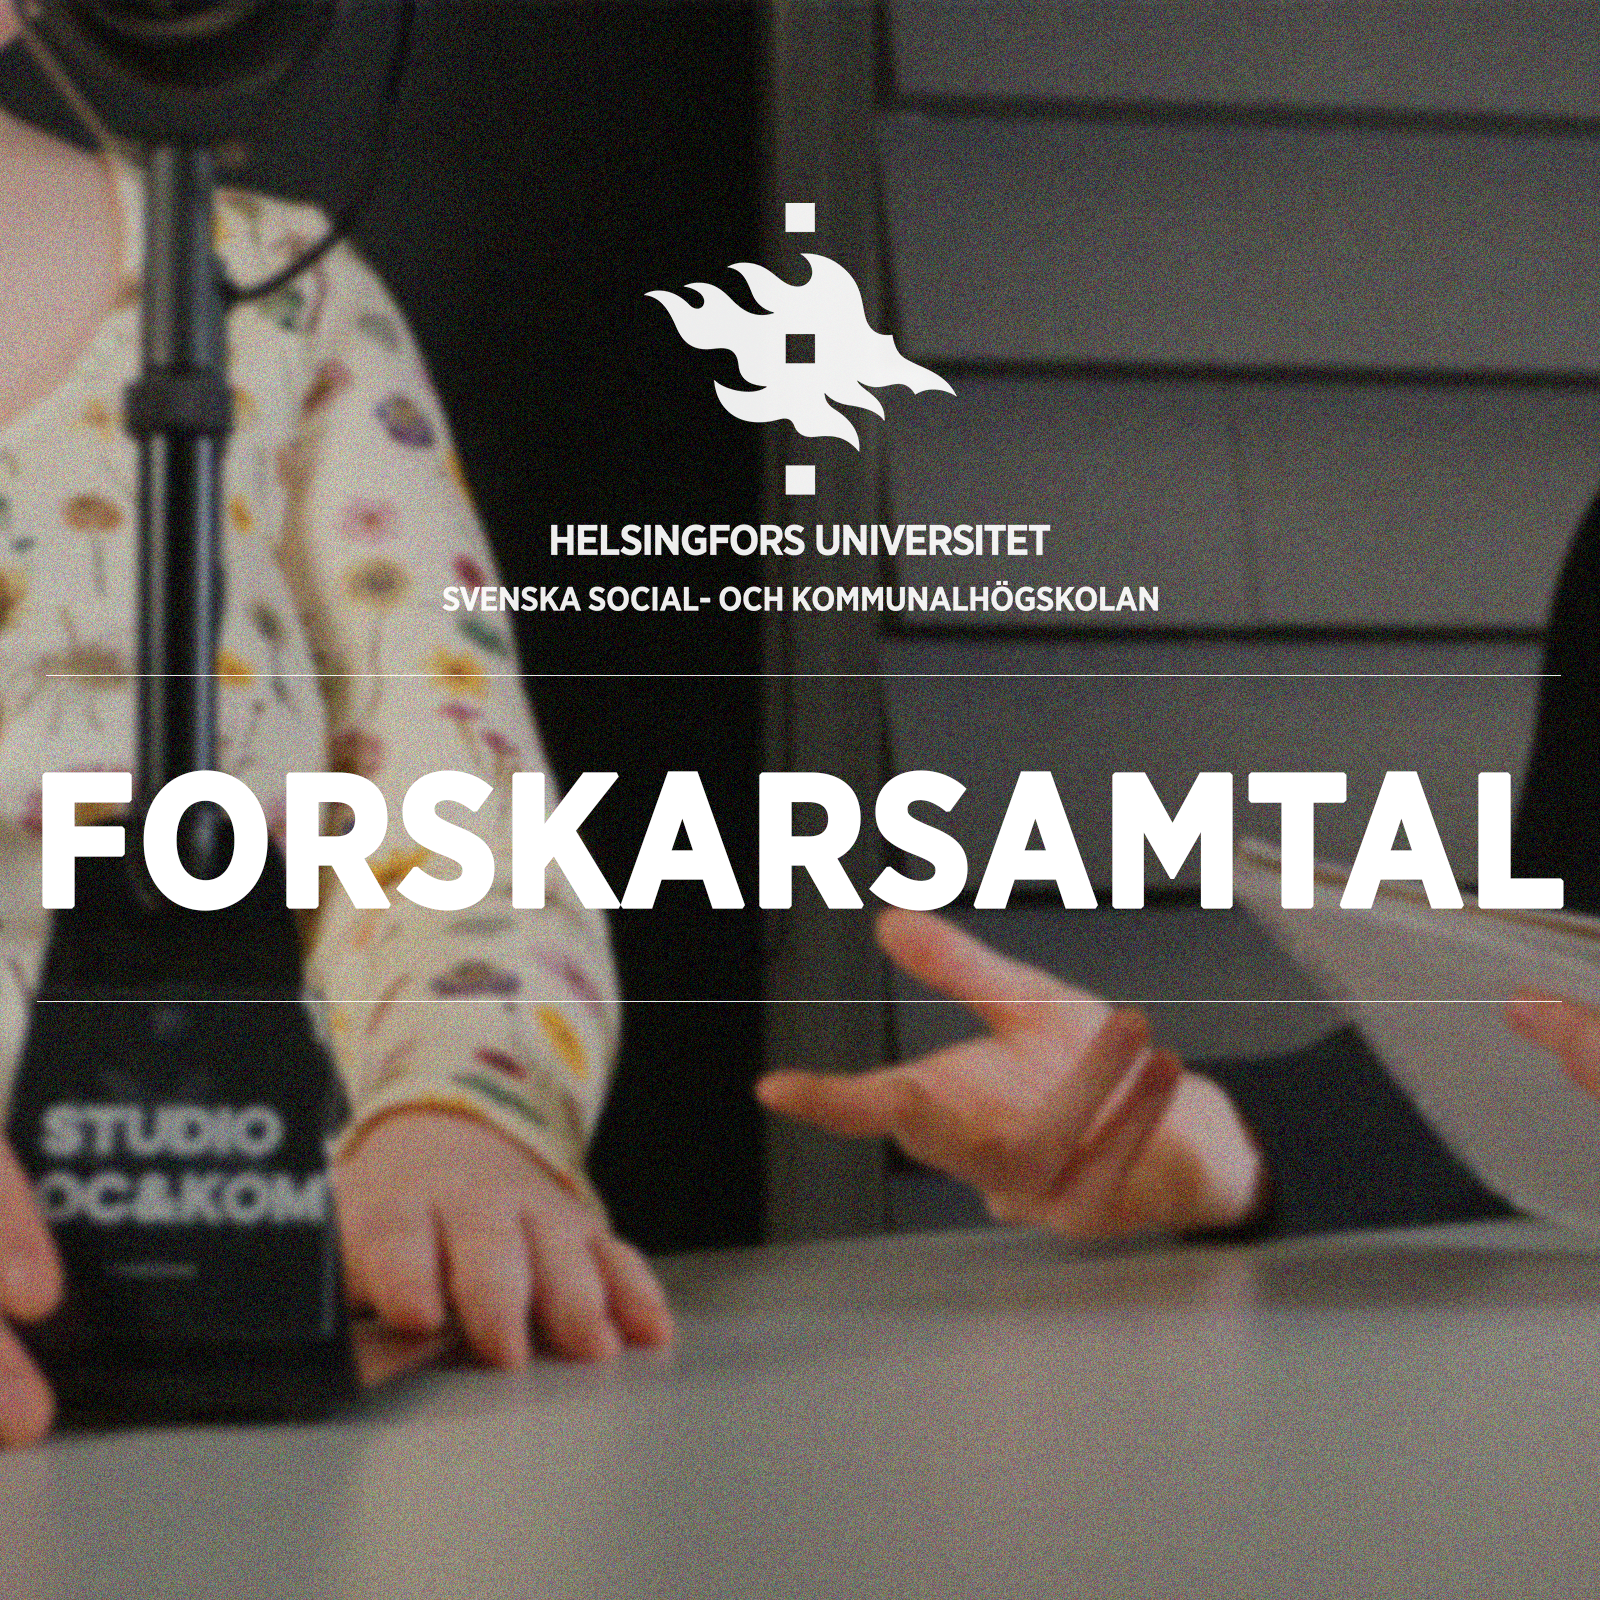 Forskarsamtal: Alternative voices in the mainstream media 